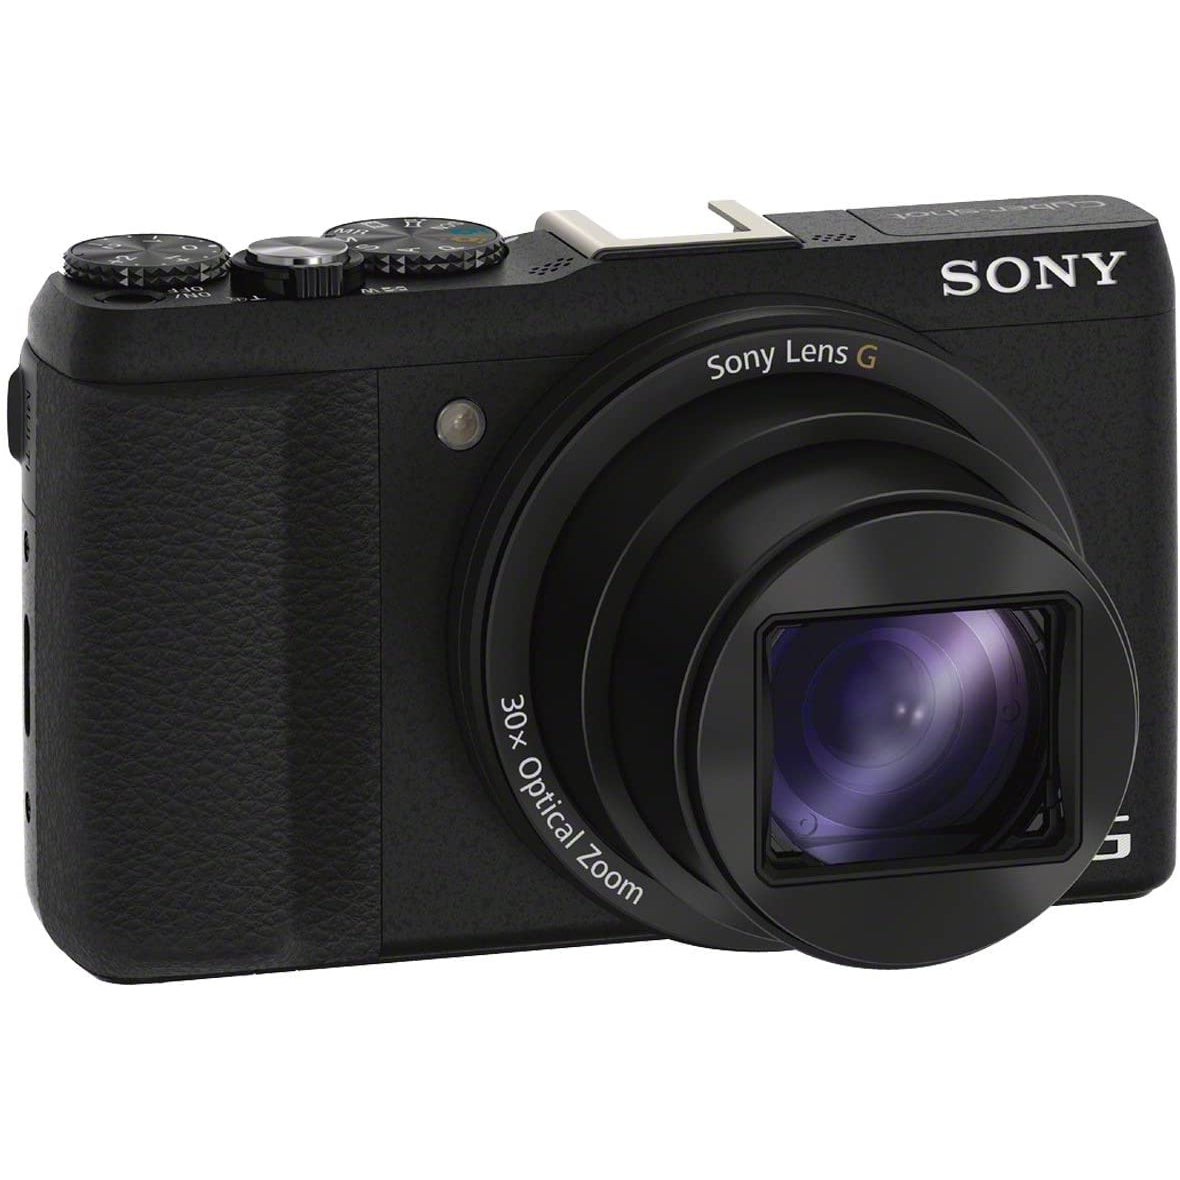 Sony Cyber-Shot DSC-HX60 Camera, HD 1080p, 20.4MP, 30x Optical Zoom, Wi-Fi, NFC, 3" Screen, Black